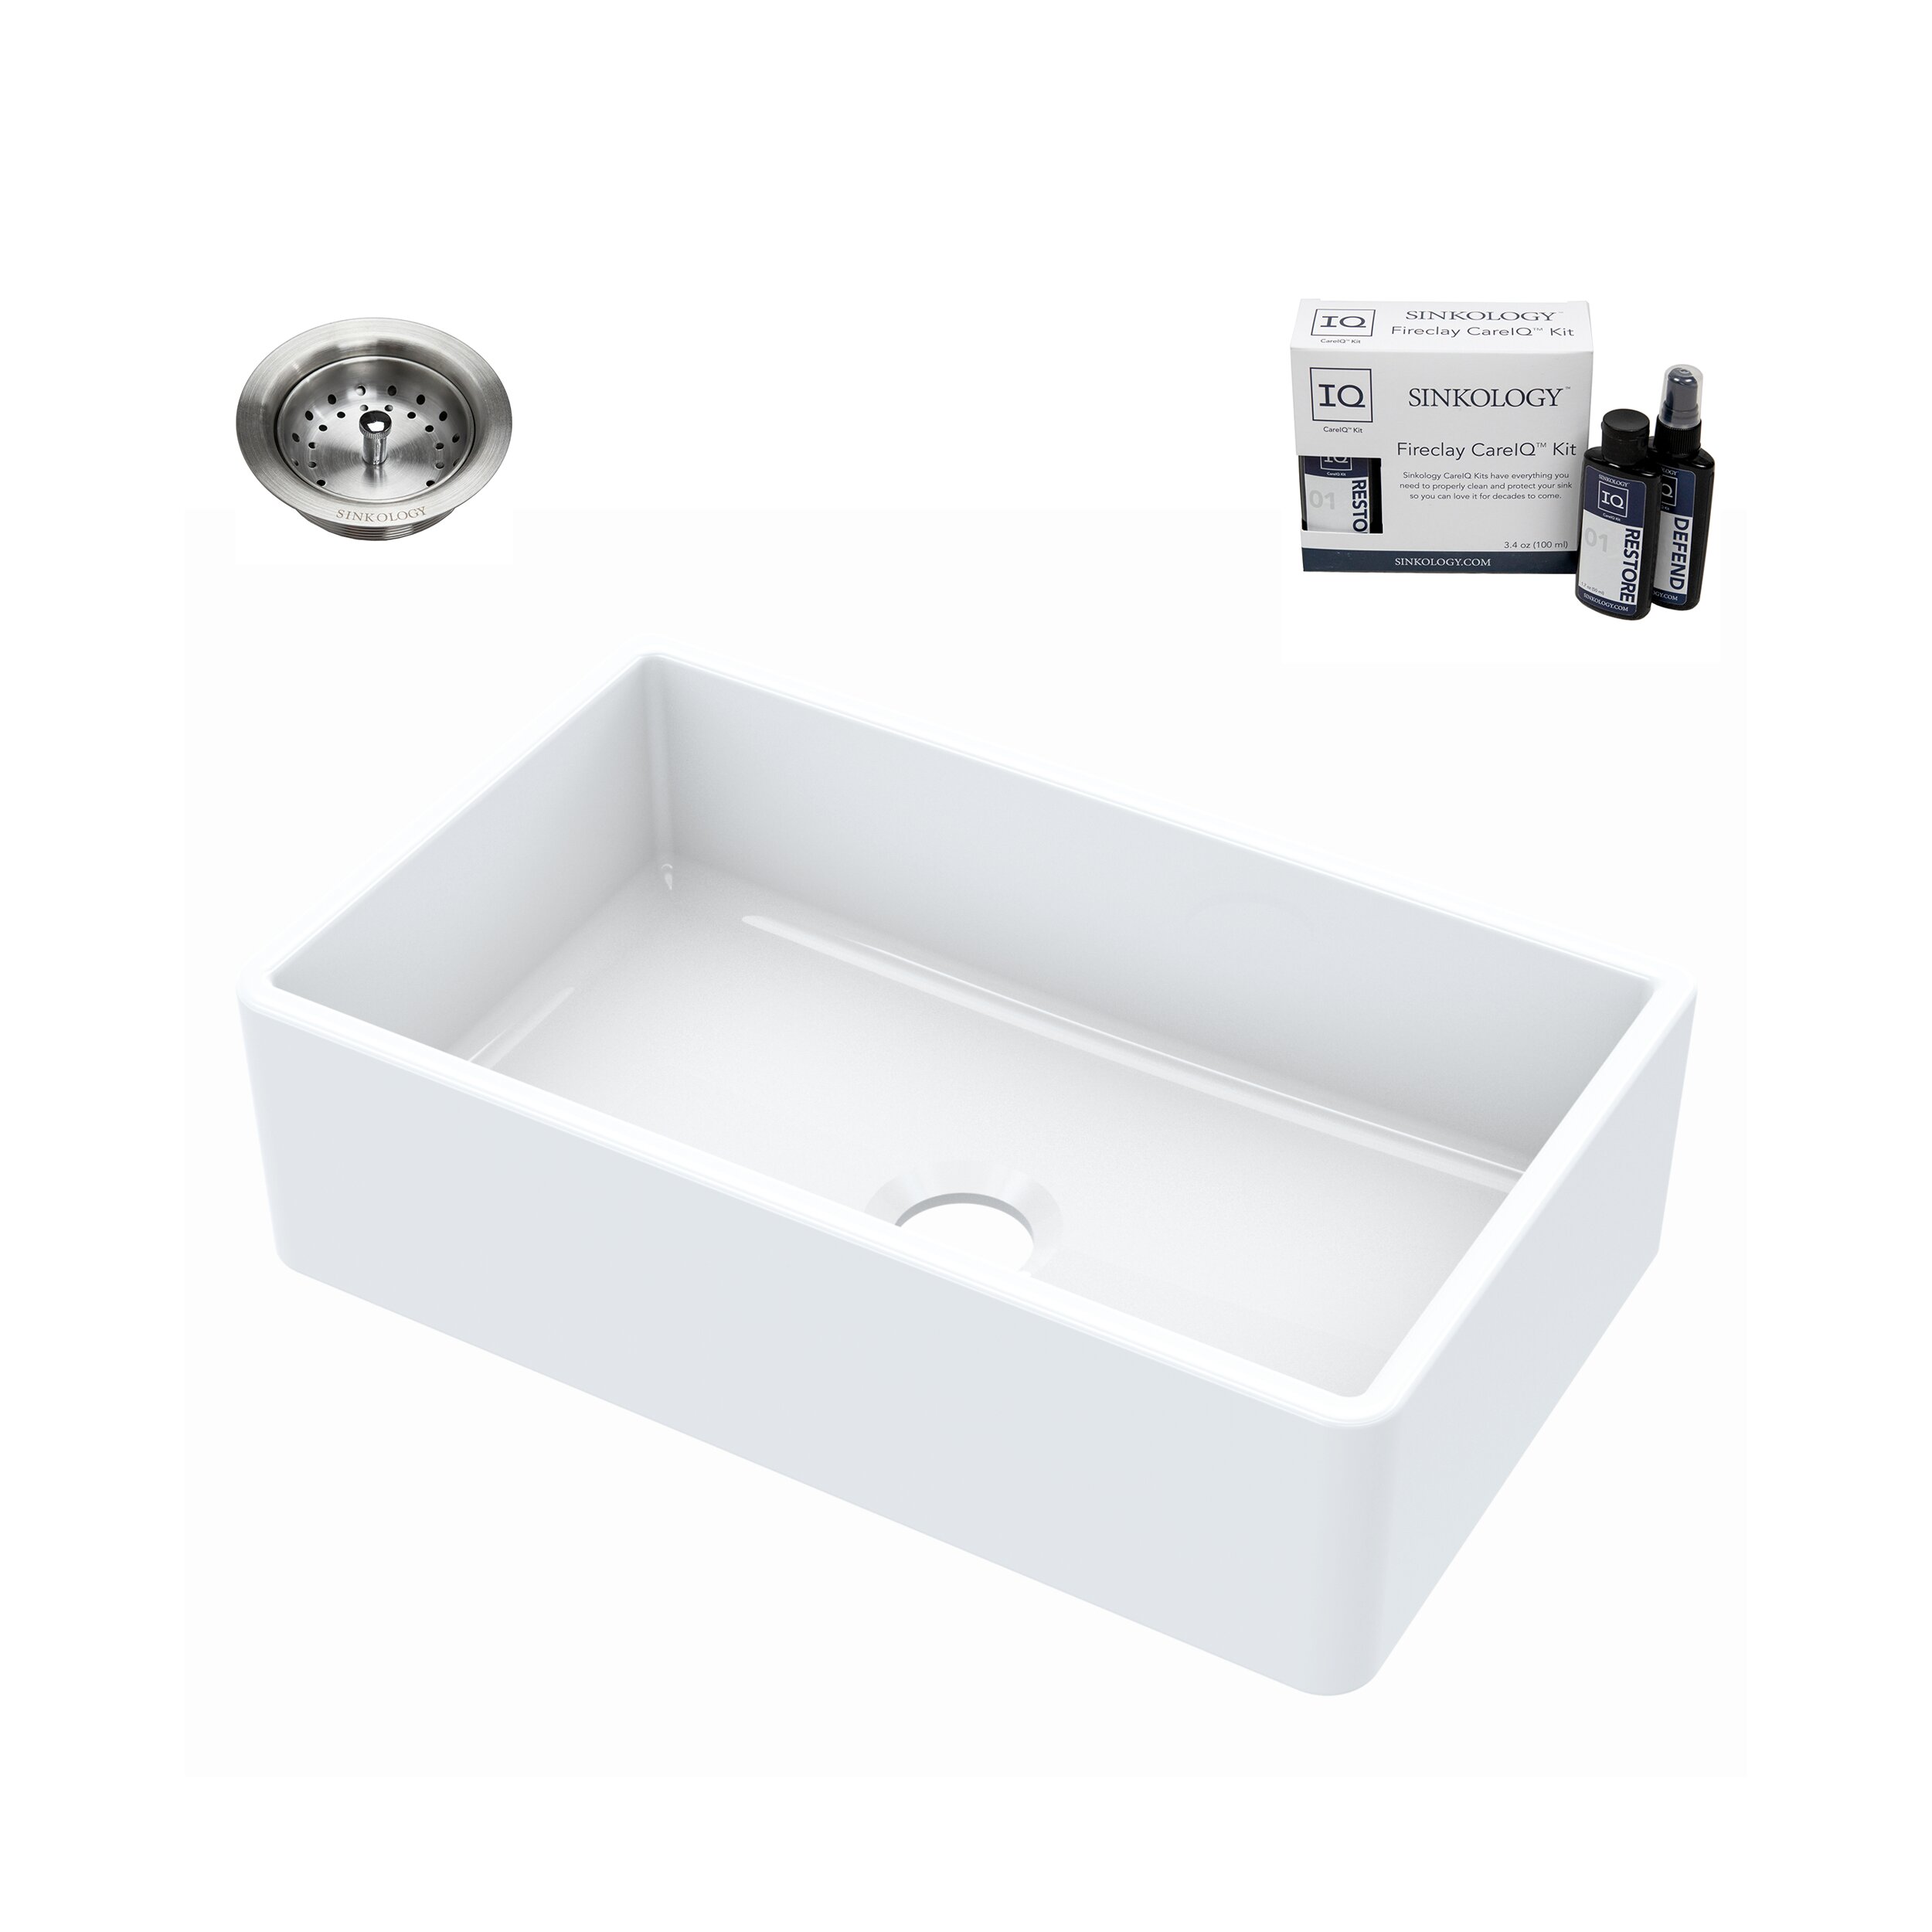 Sinkology Turner 30 L X 18 W Farmhouse Apron Kitchen Sink With Basket Strainer Reviews Wayfair